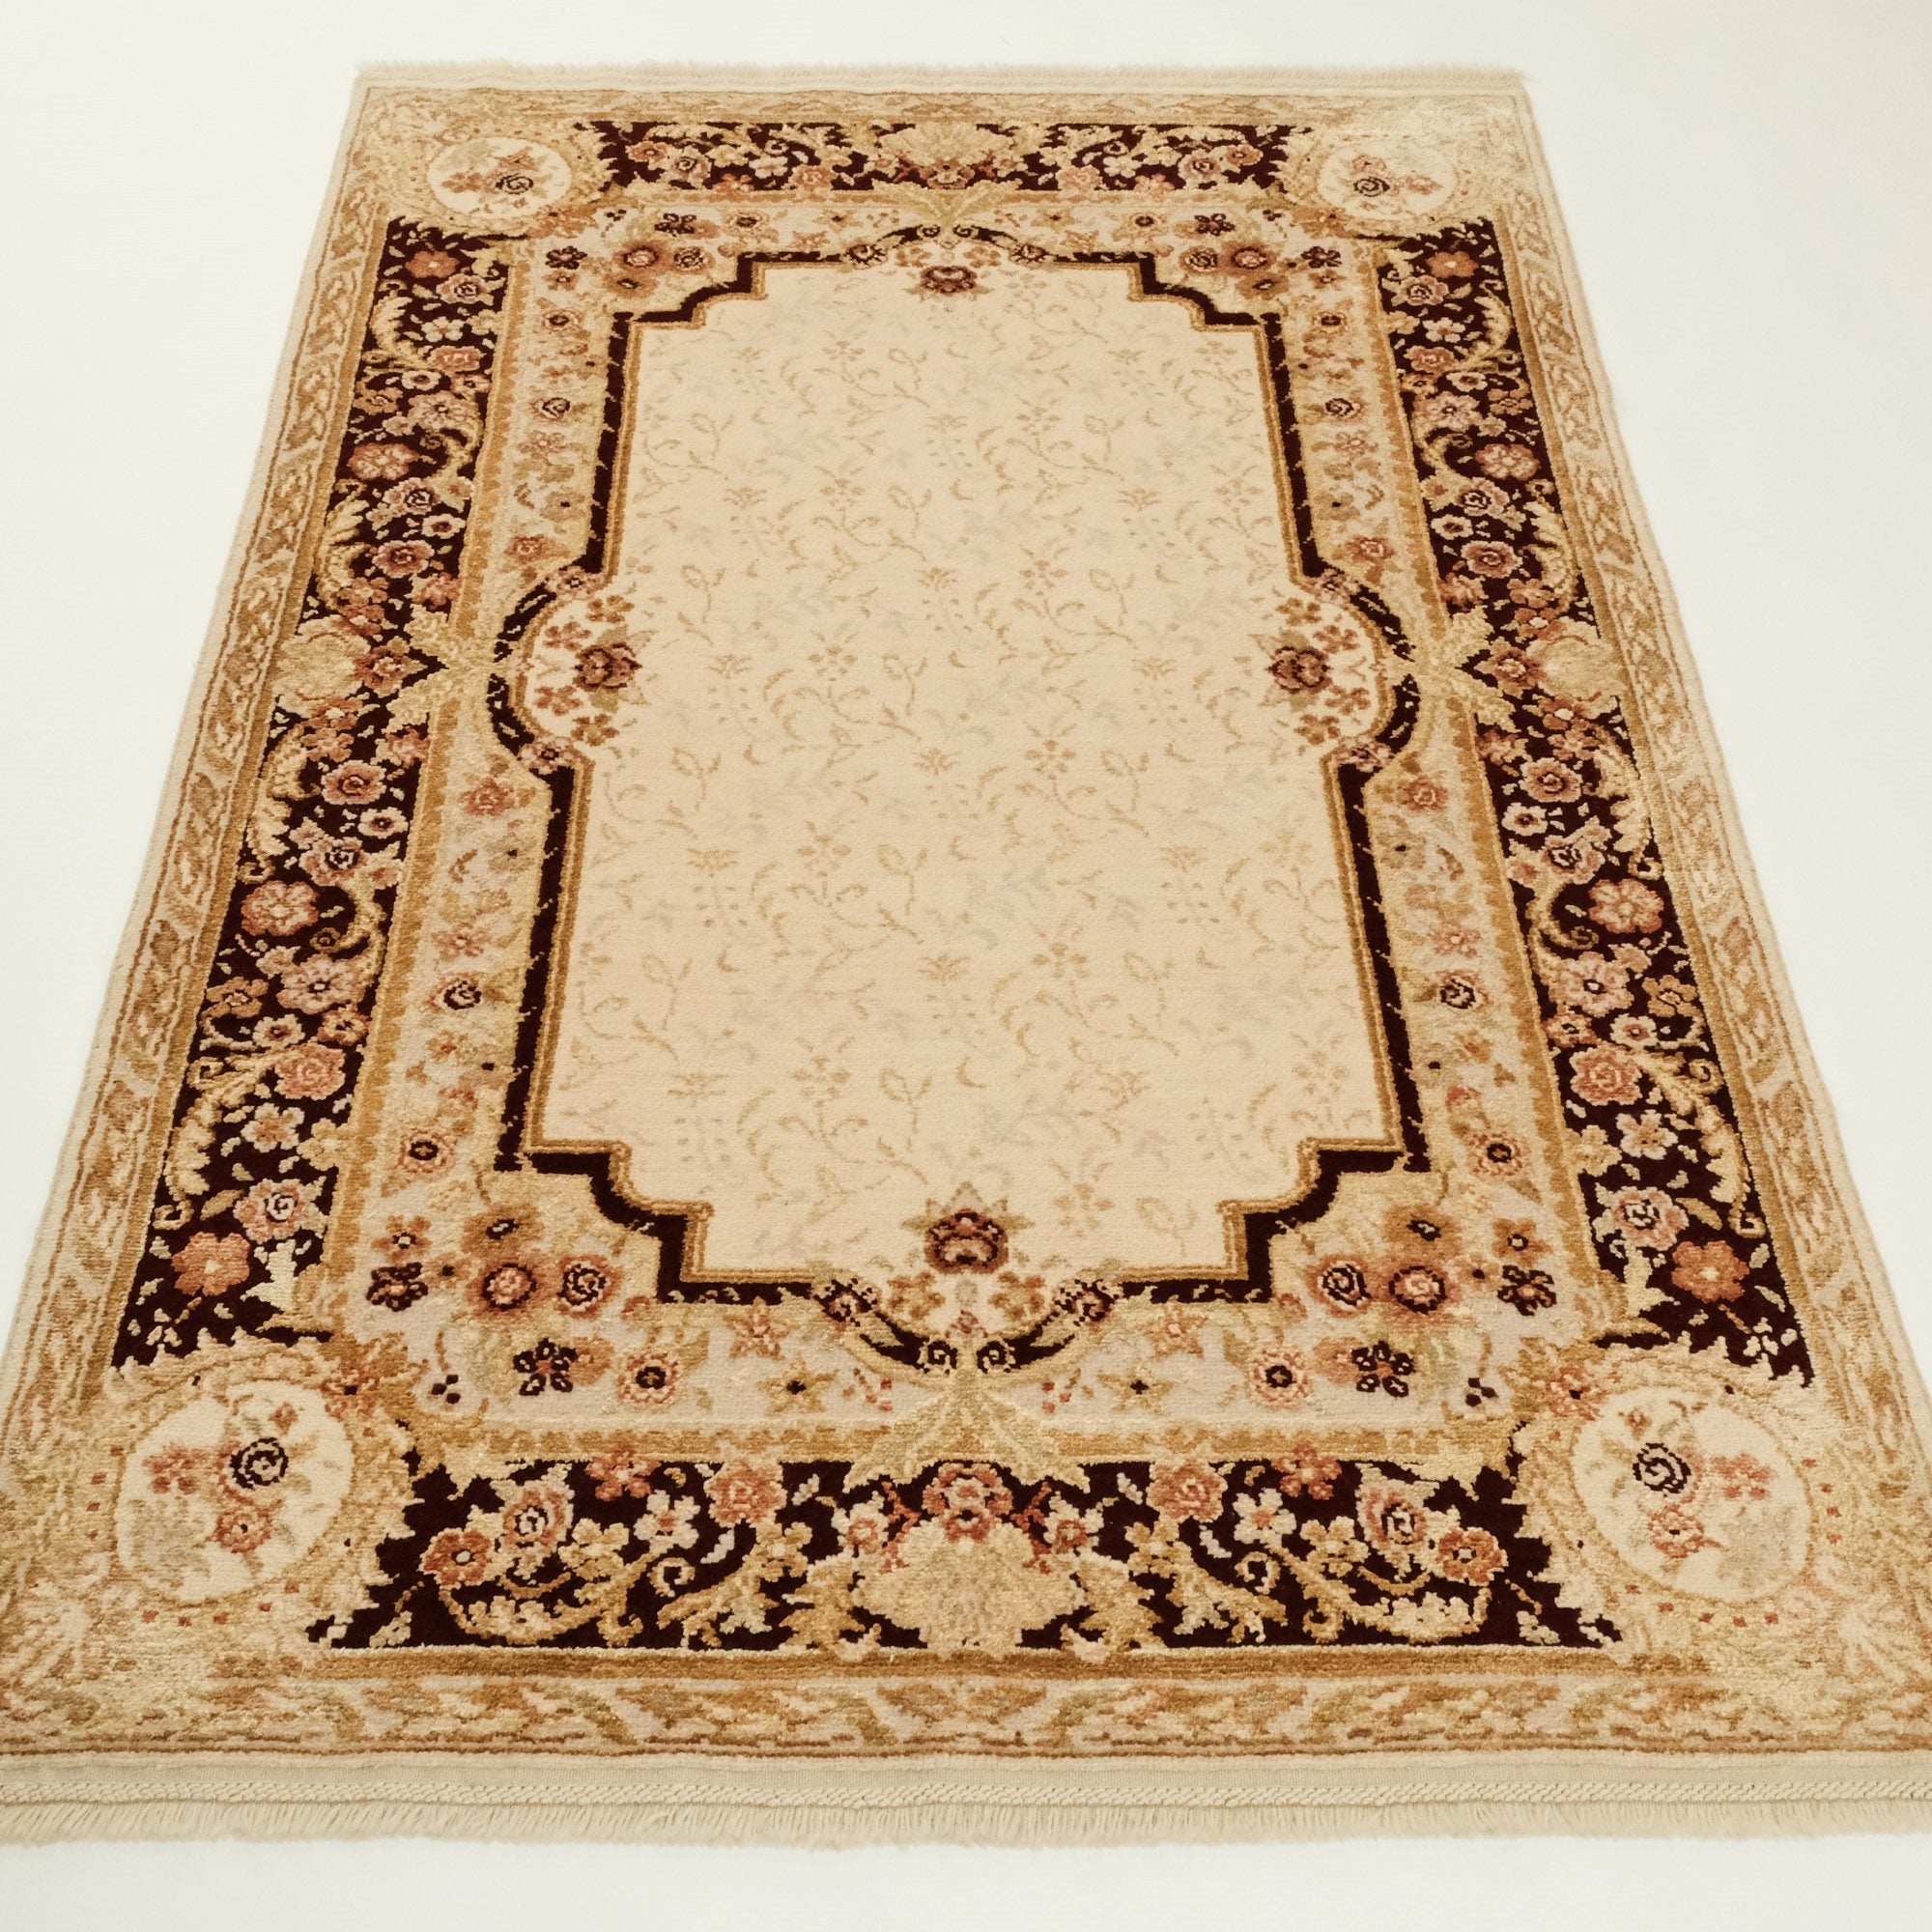 Ottoman Series Frame Design Hand Woven Carpet